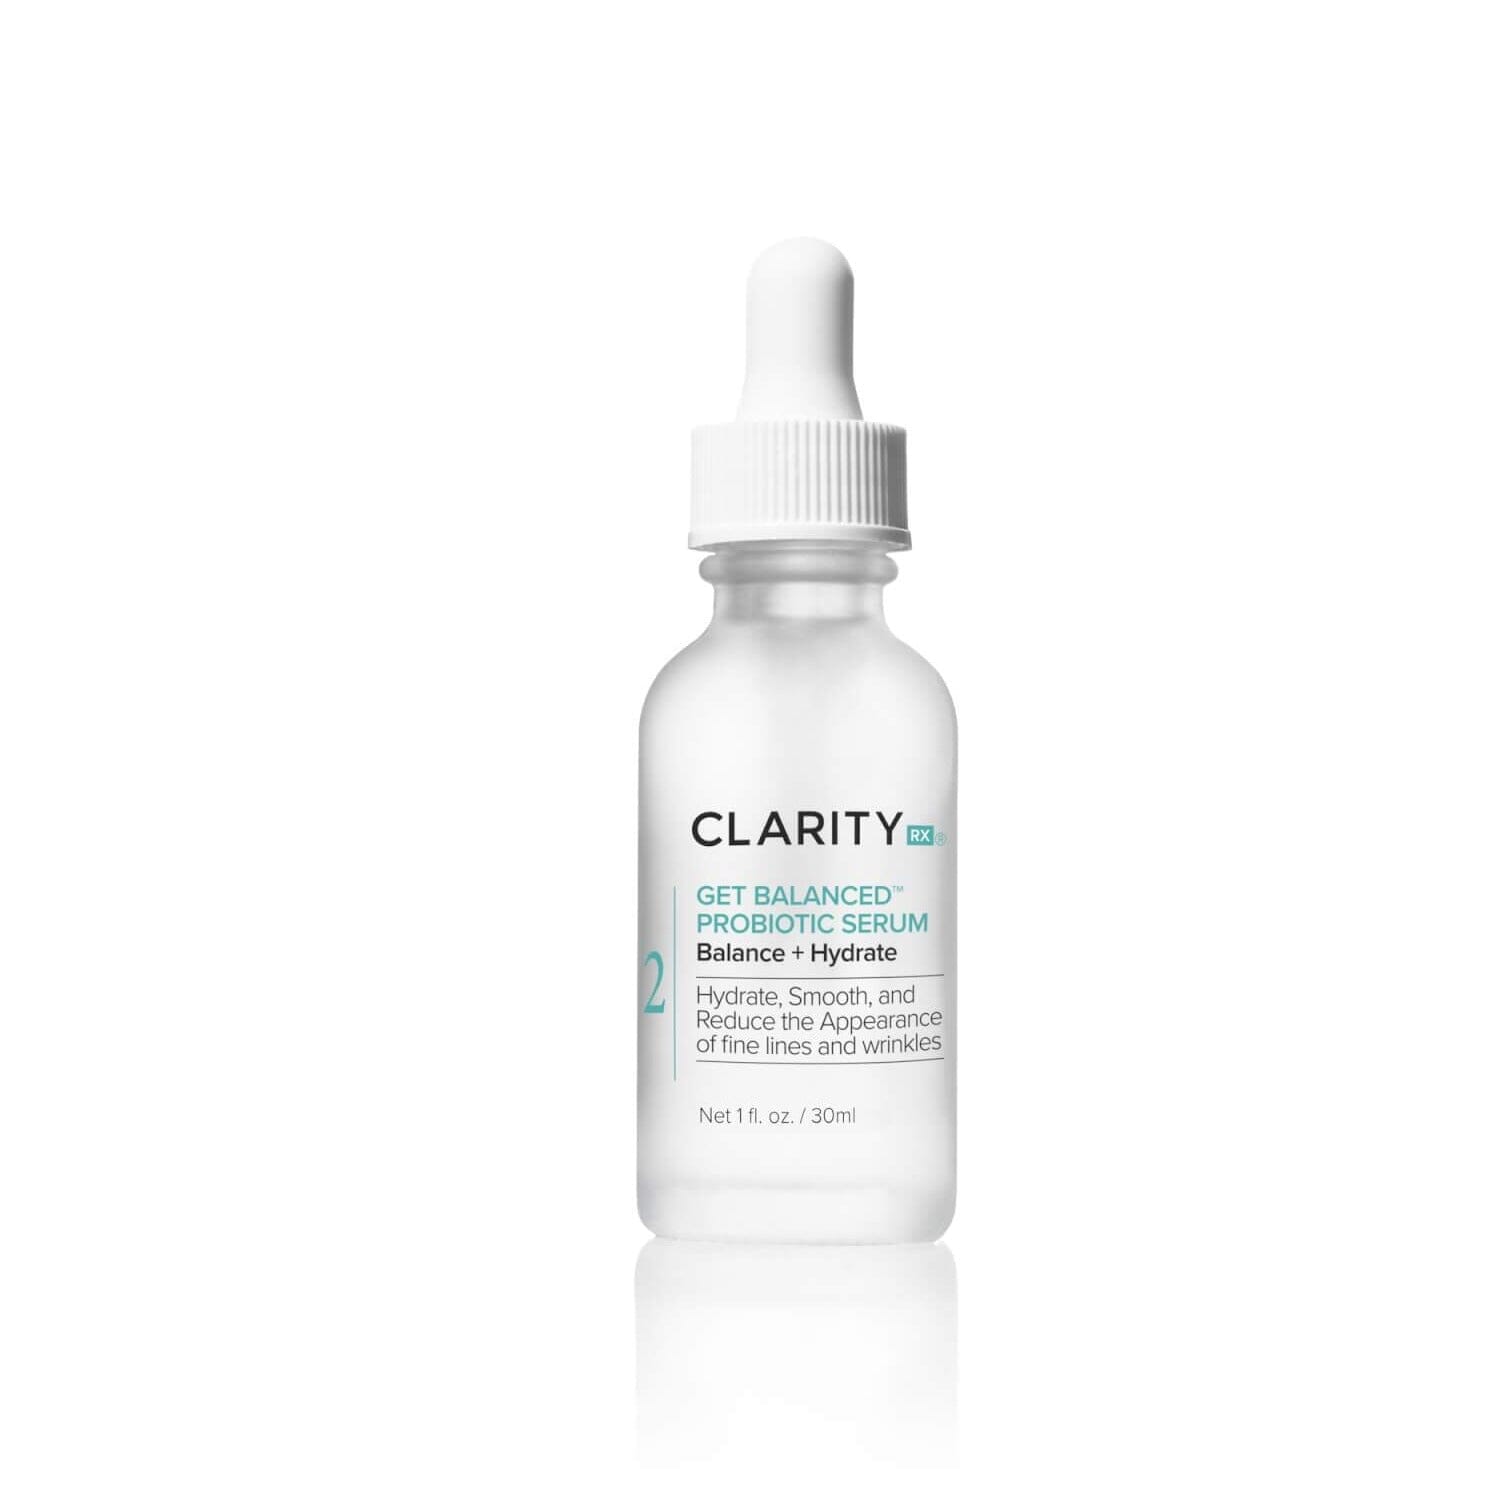 ClarityRx Get Balanced Probiotic Serum ClarityRx 1 oz. Shop at Exclusive Beauty Club